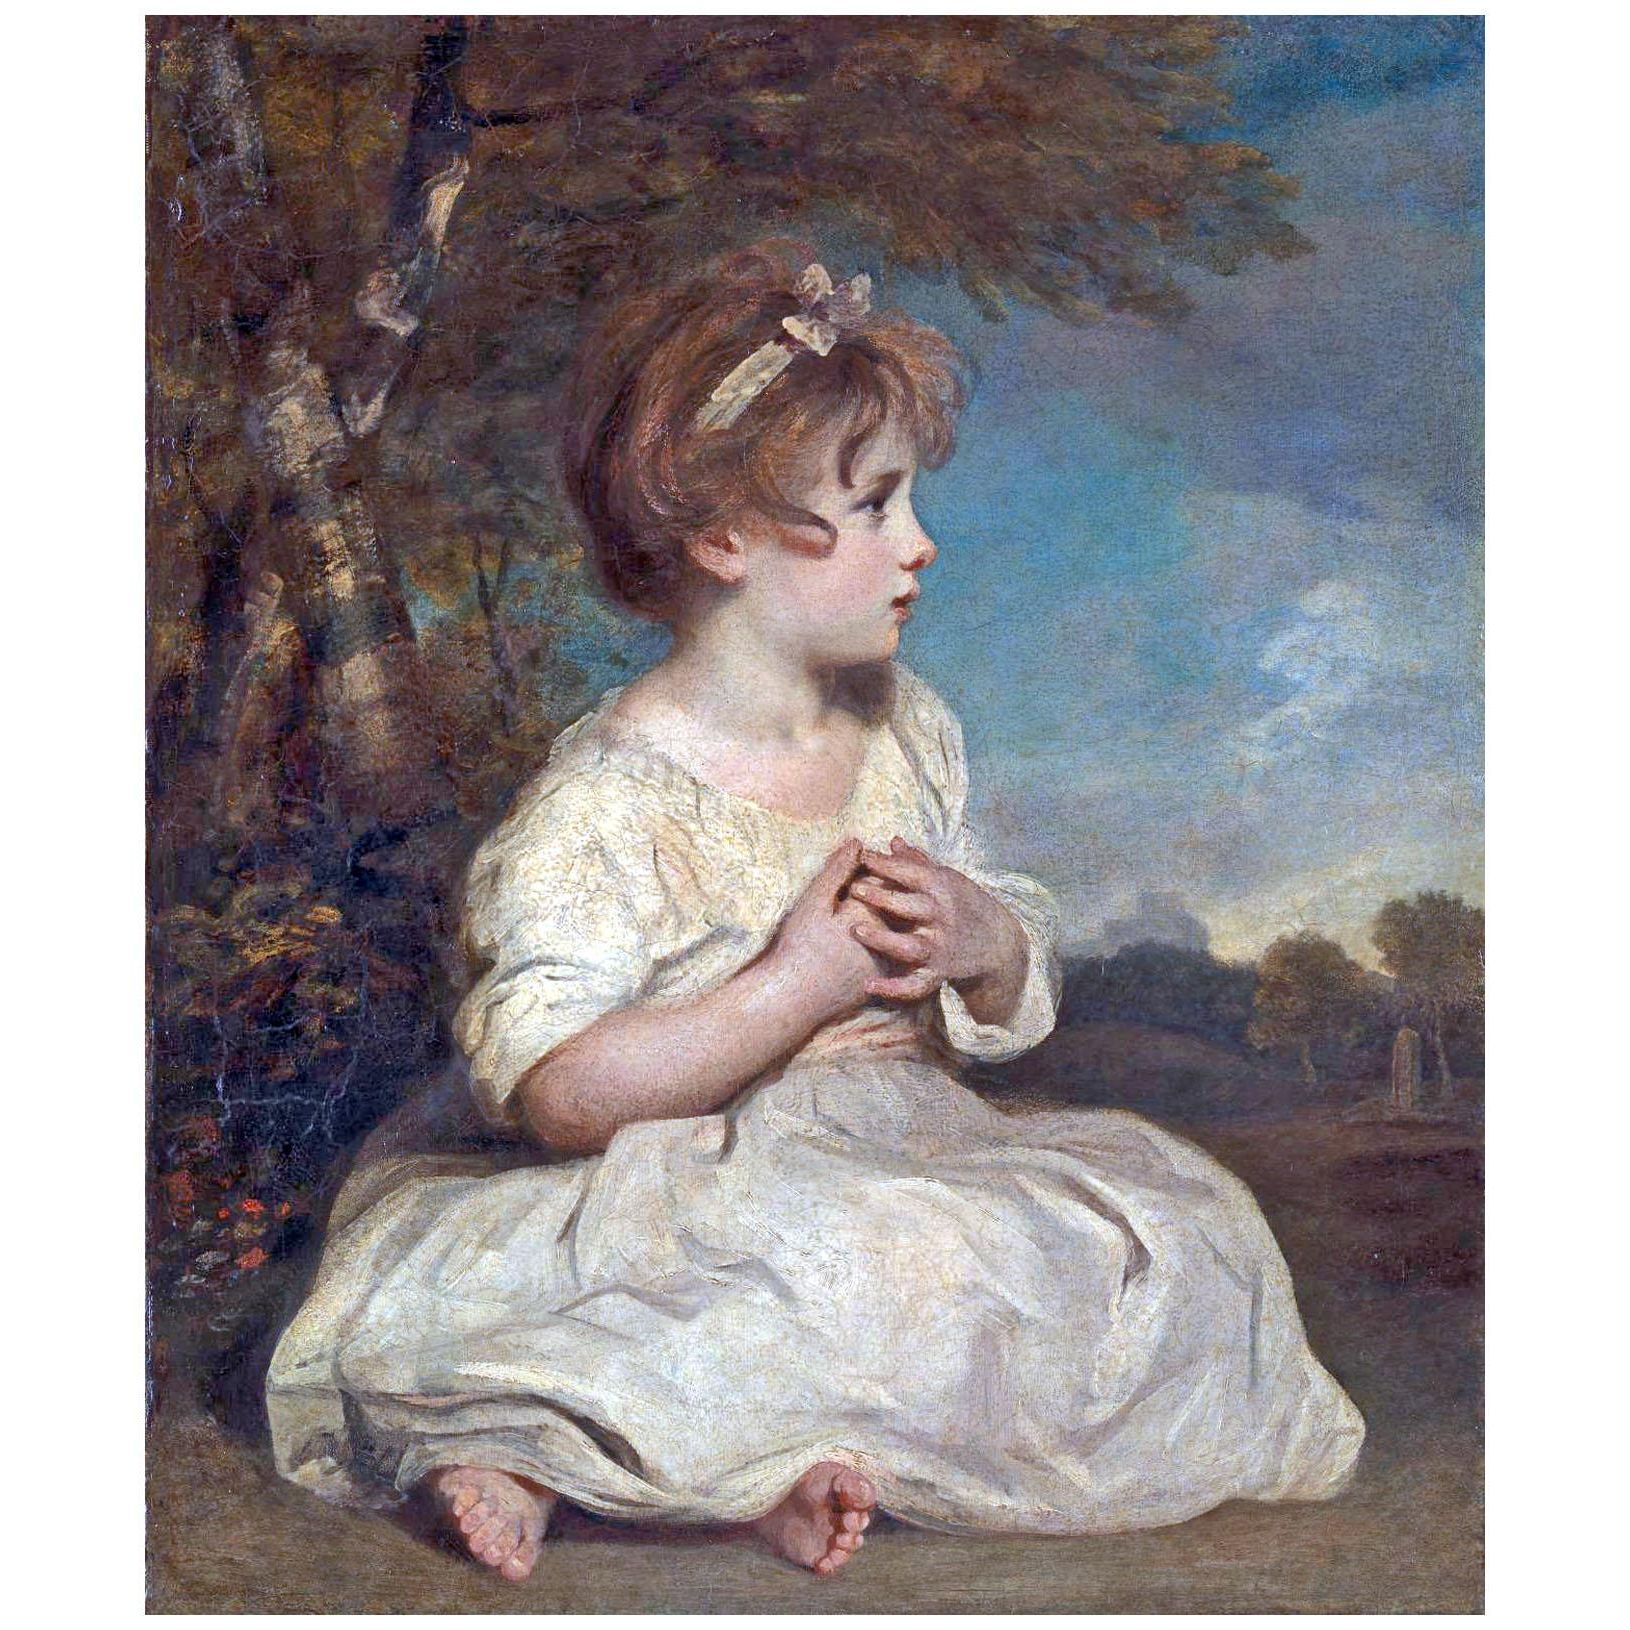 Joshua Reynolds. The Age of Innocence. 1788. Tate Britain